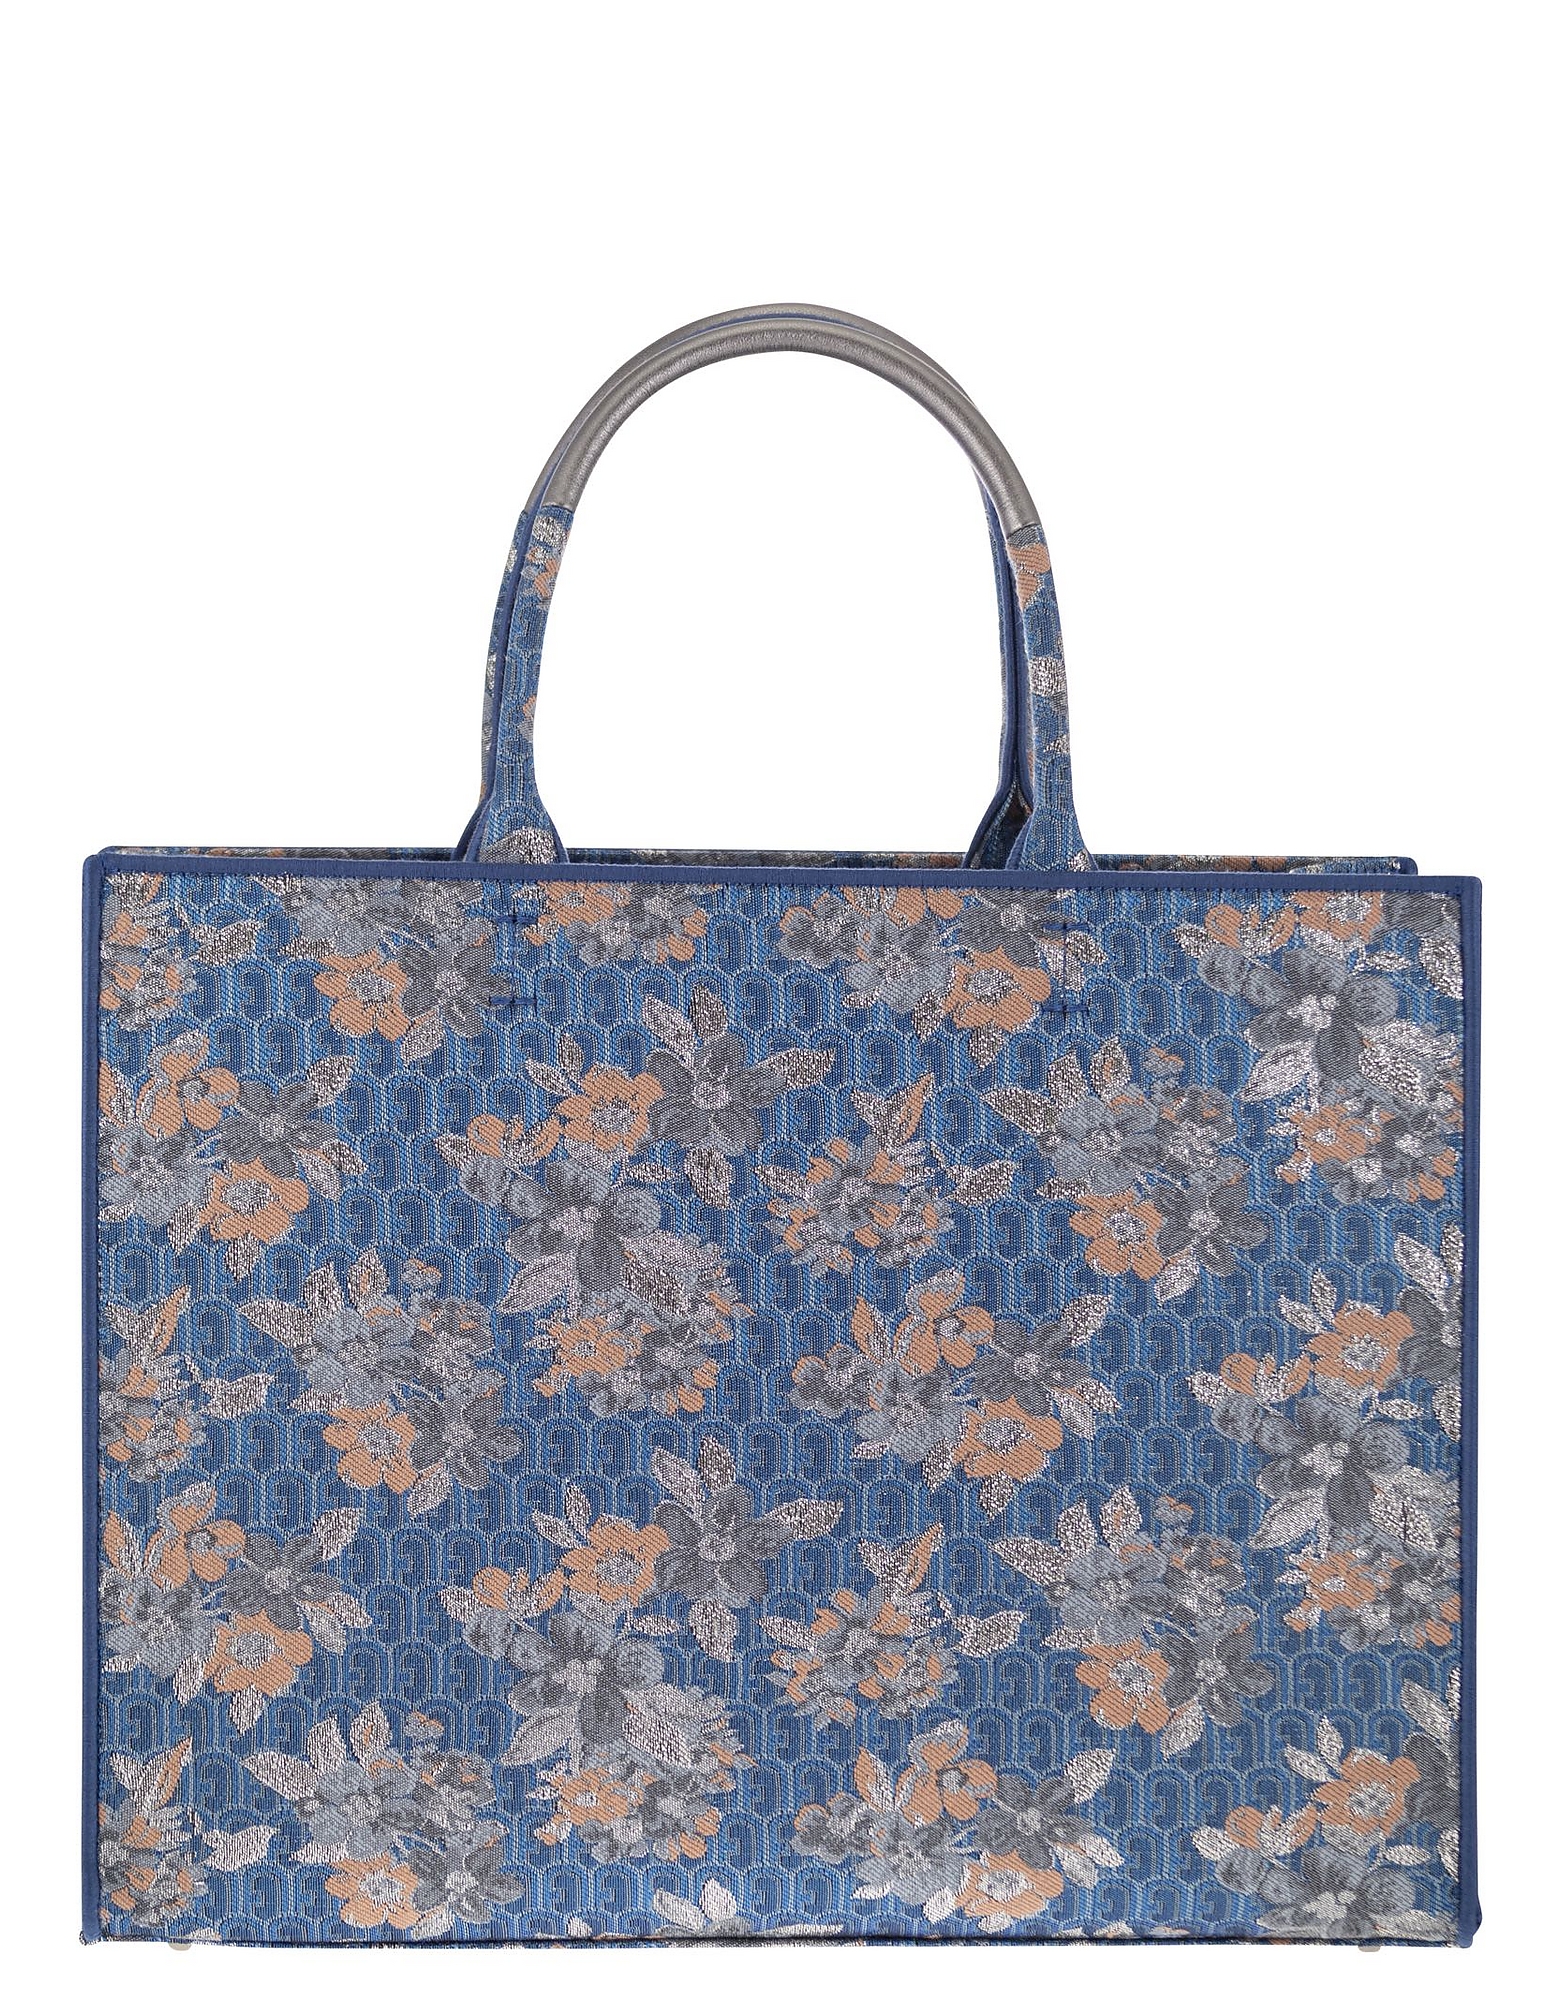 Furla Designer Handbags Opportunity - Tote Bag In Bleu